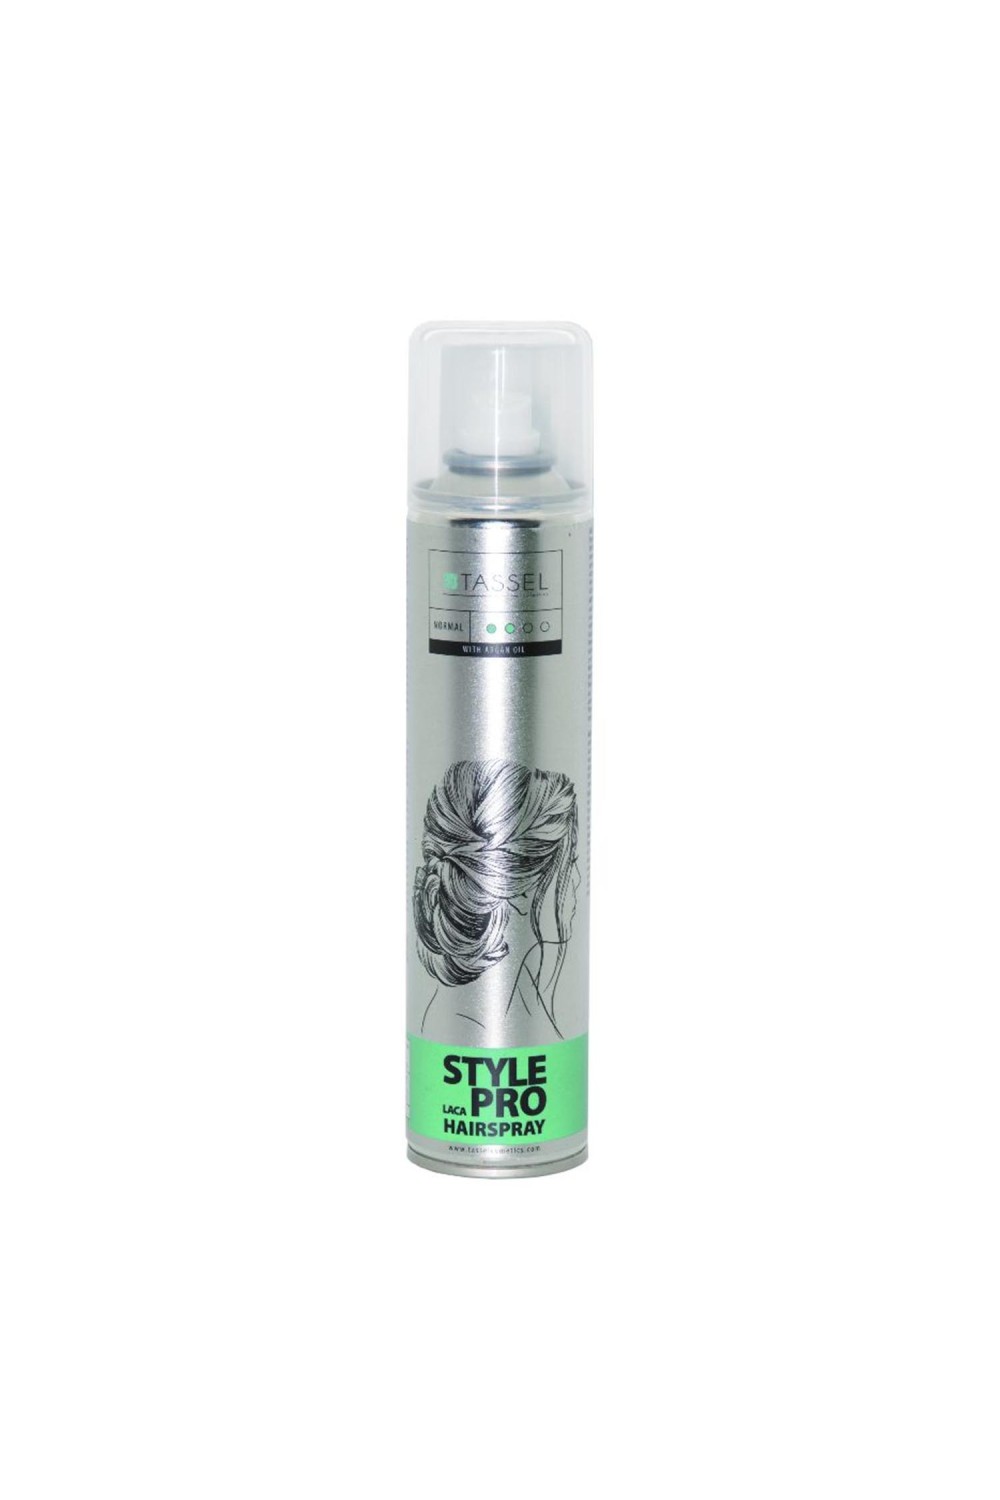 Eurostil Tassel Laca Style Pro Normal 300ml Spray